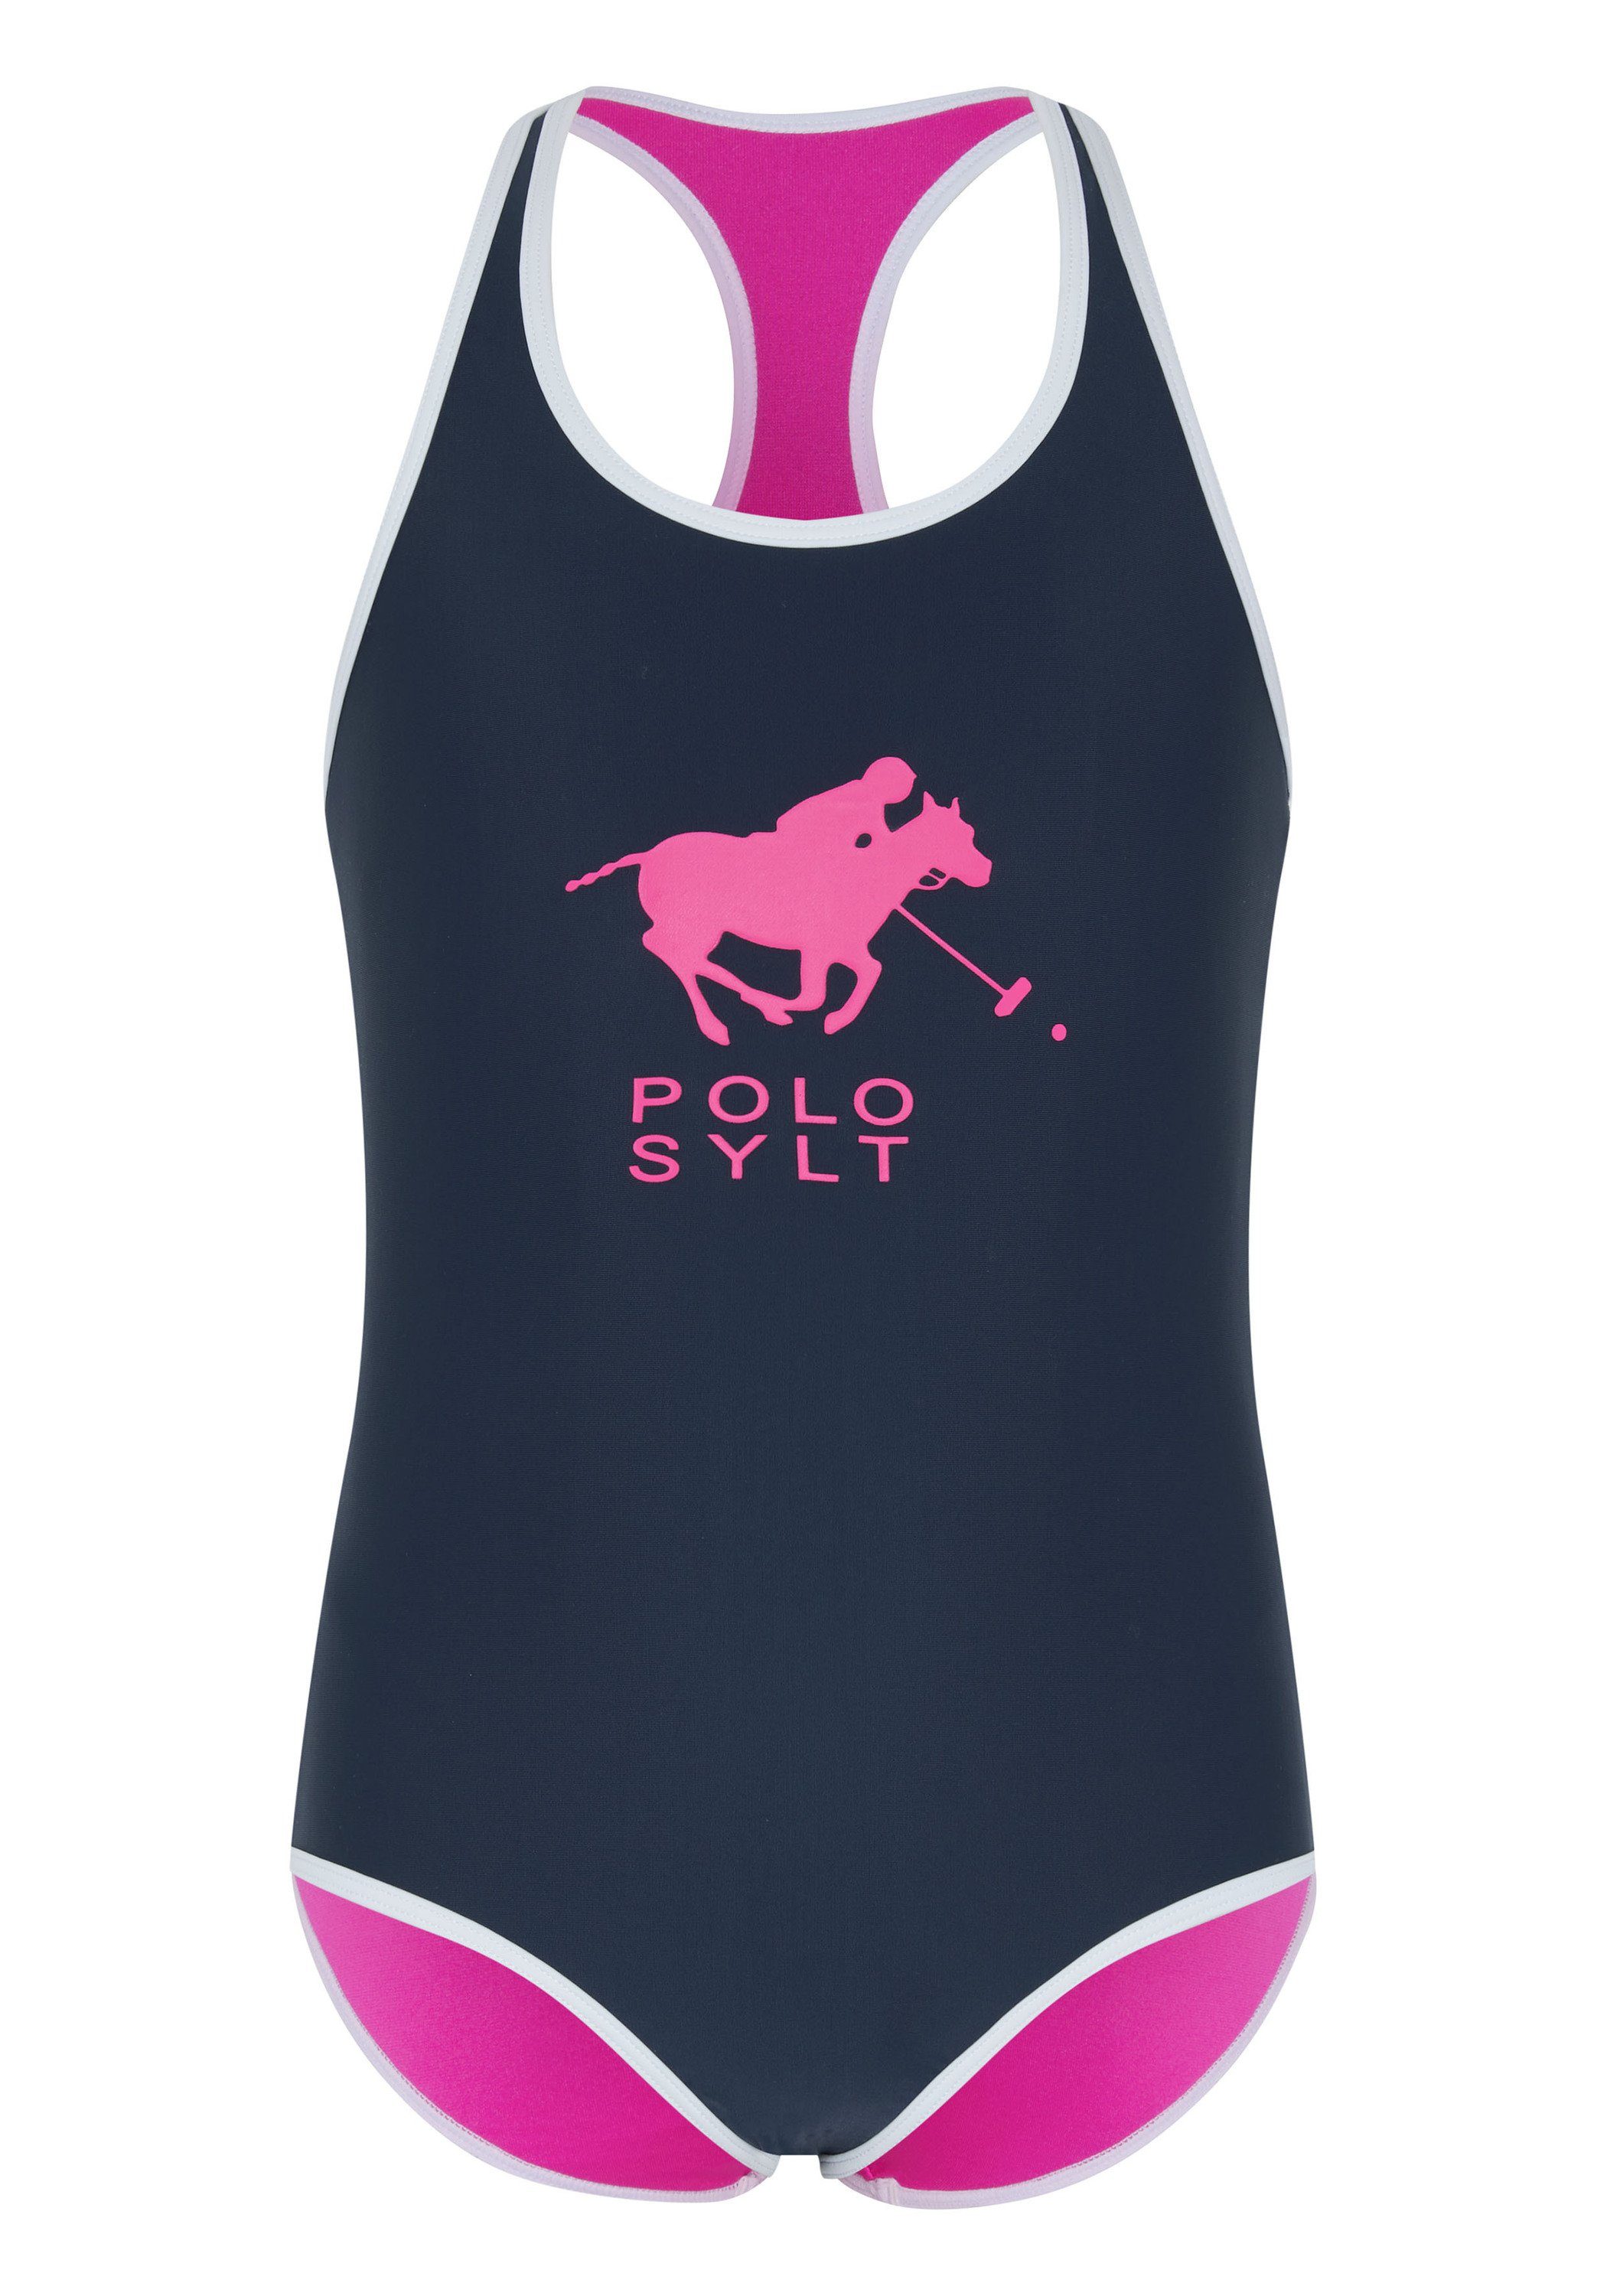 Polo Sylt Badeanzug mit Logo-Print